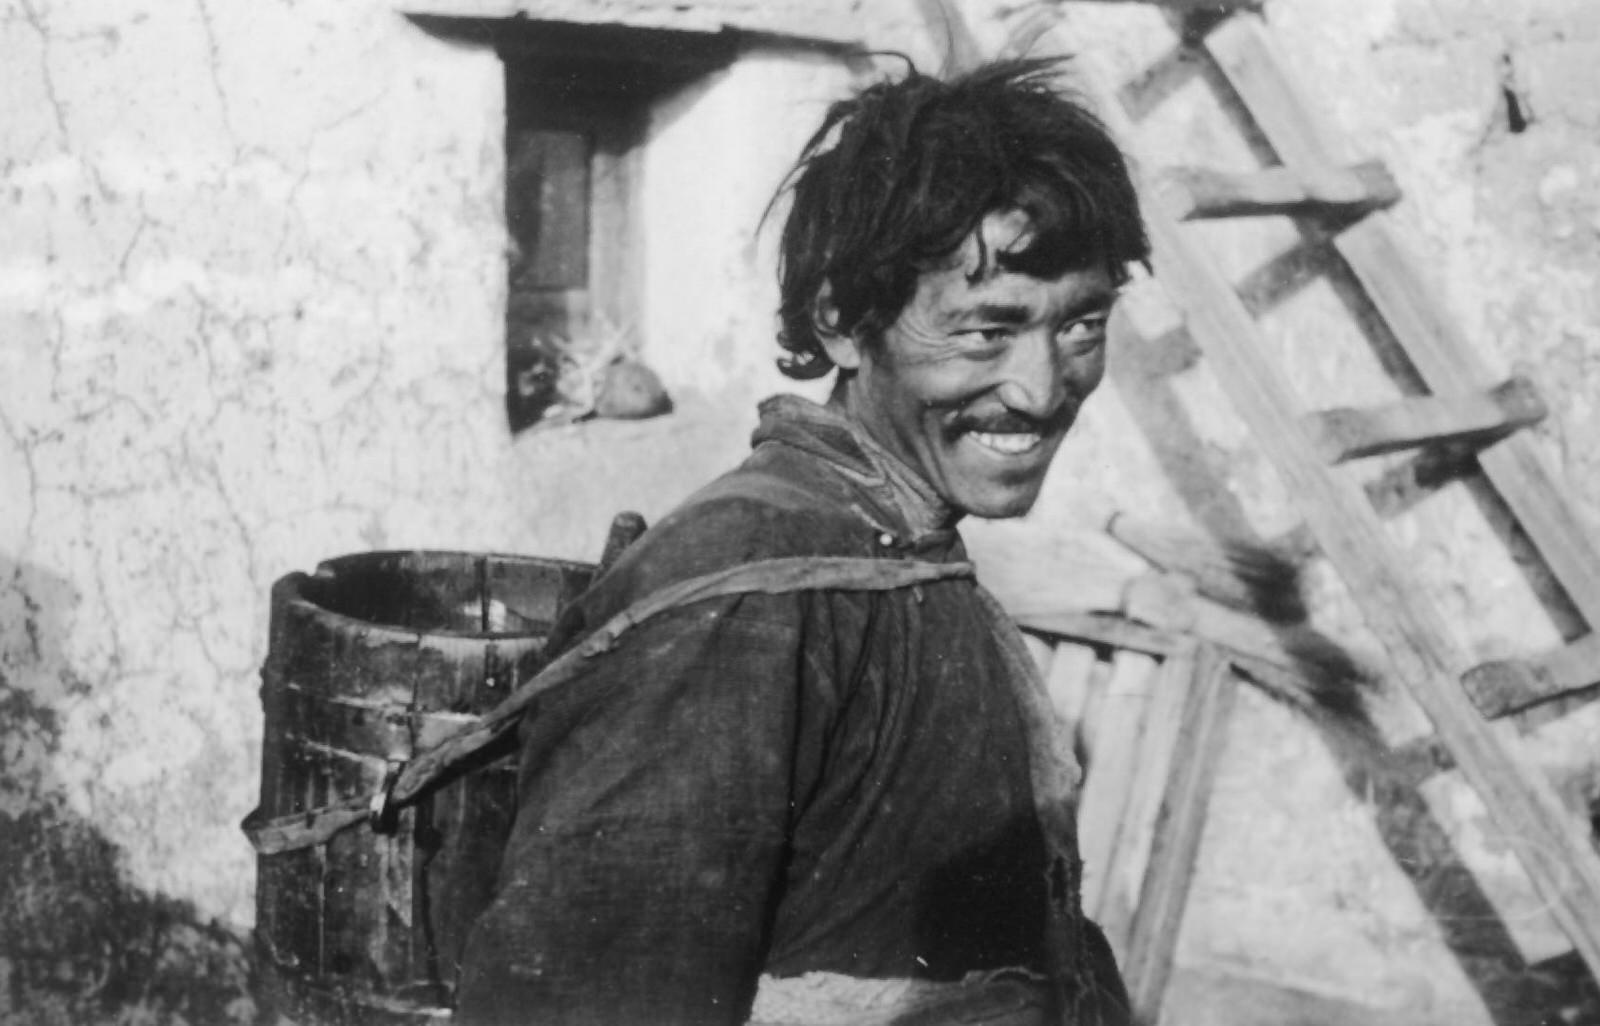 Tibetan Water-Carrier, 1944